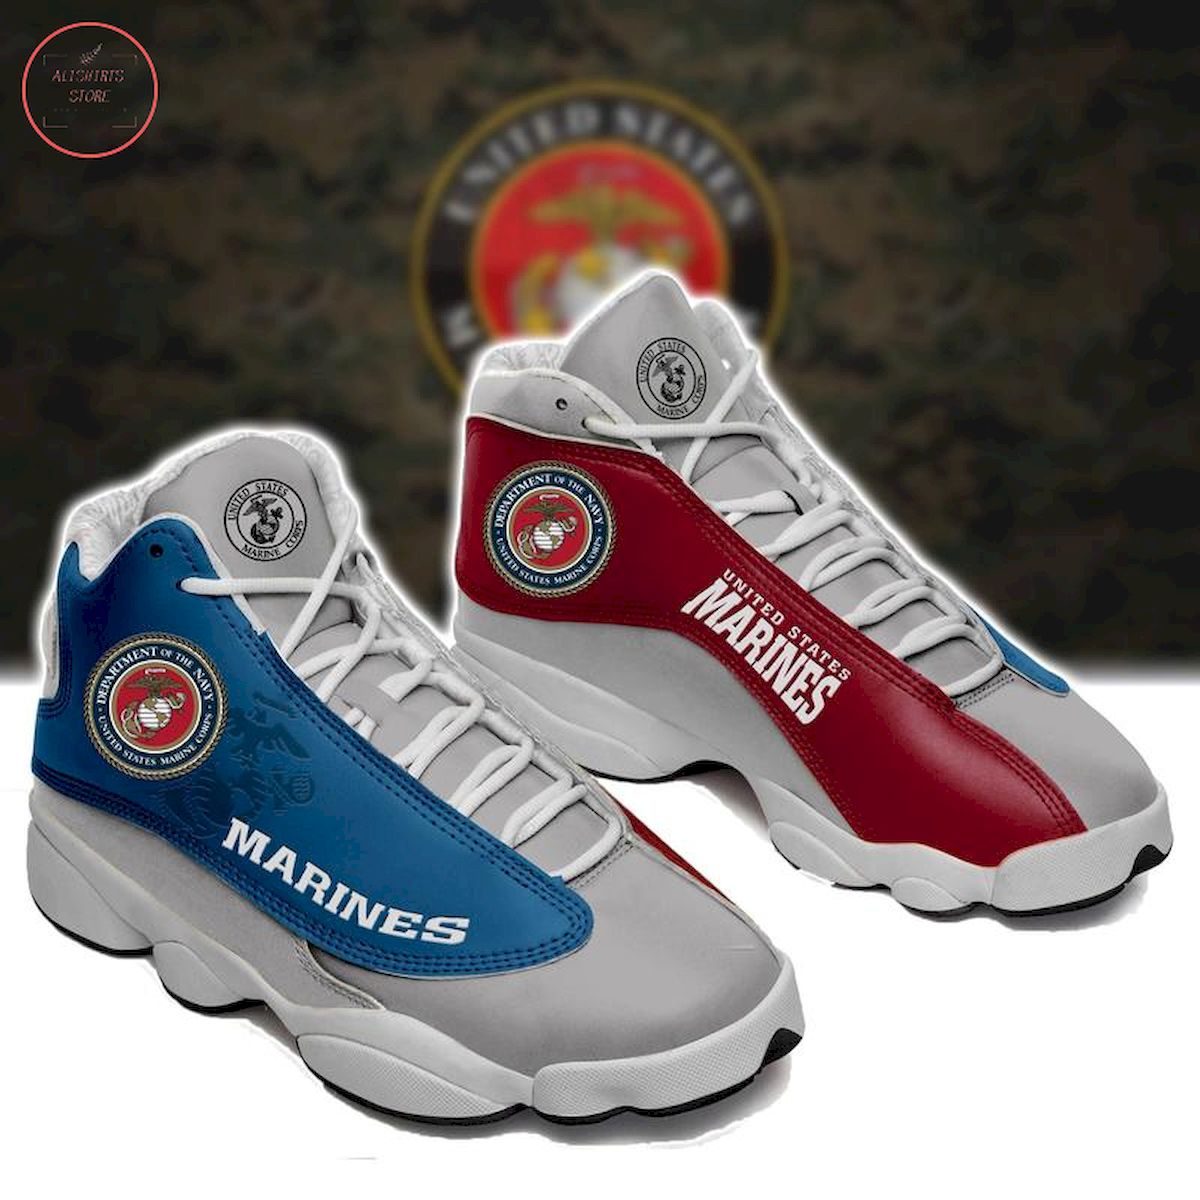 United States Marines Air Jordan 13 Sneaker Shoes